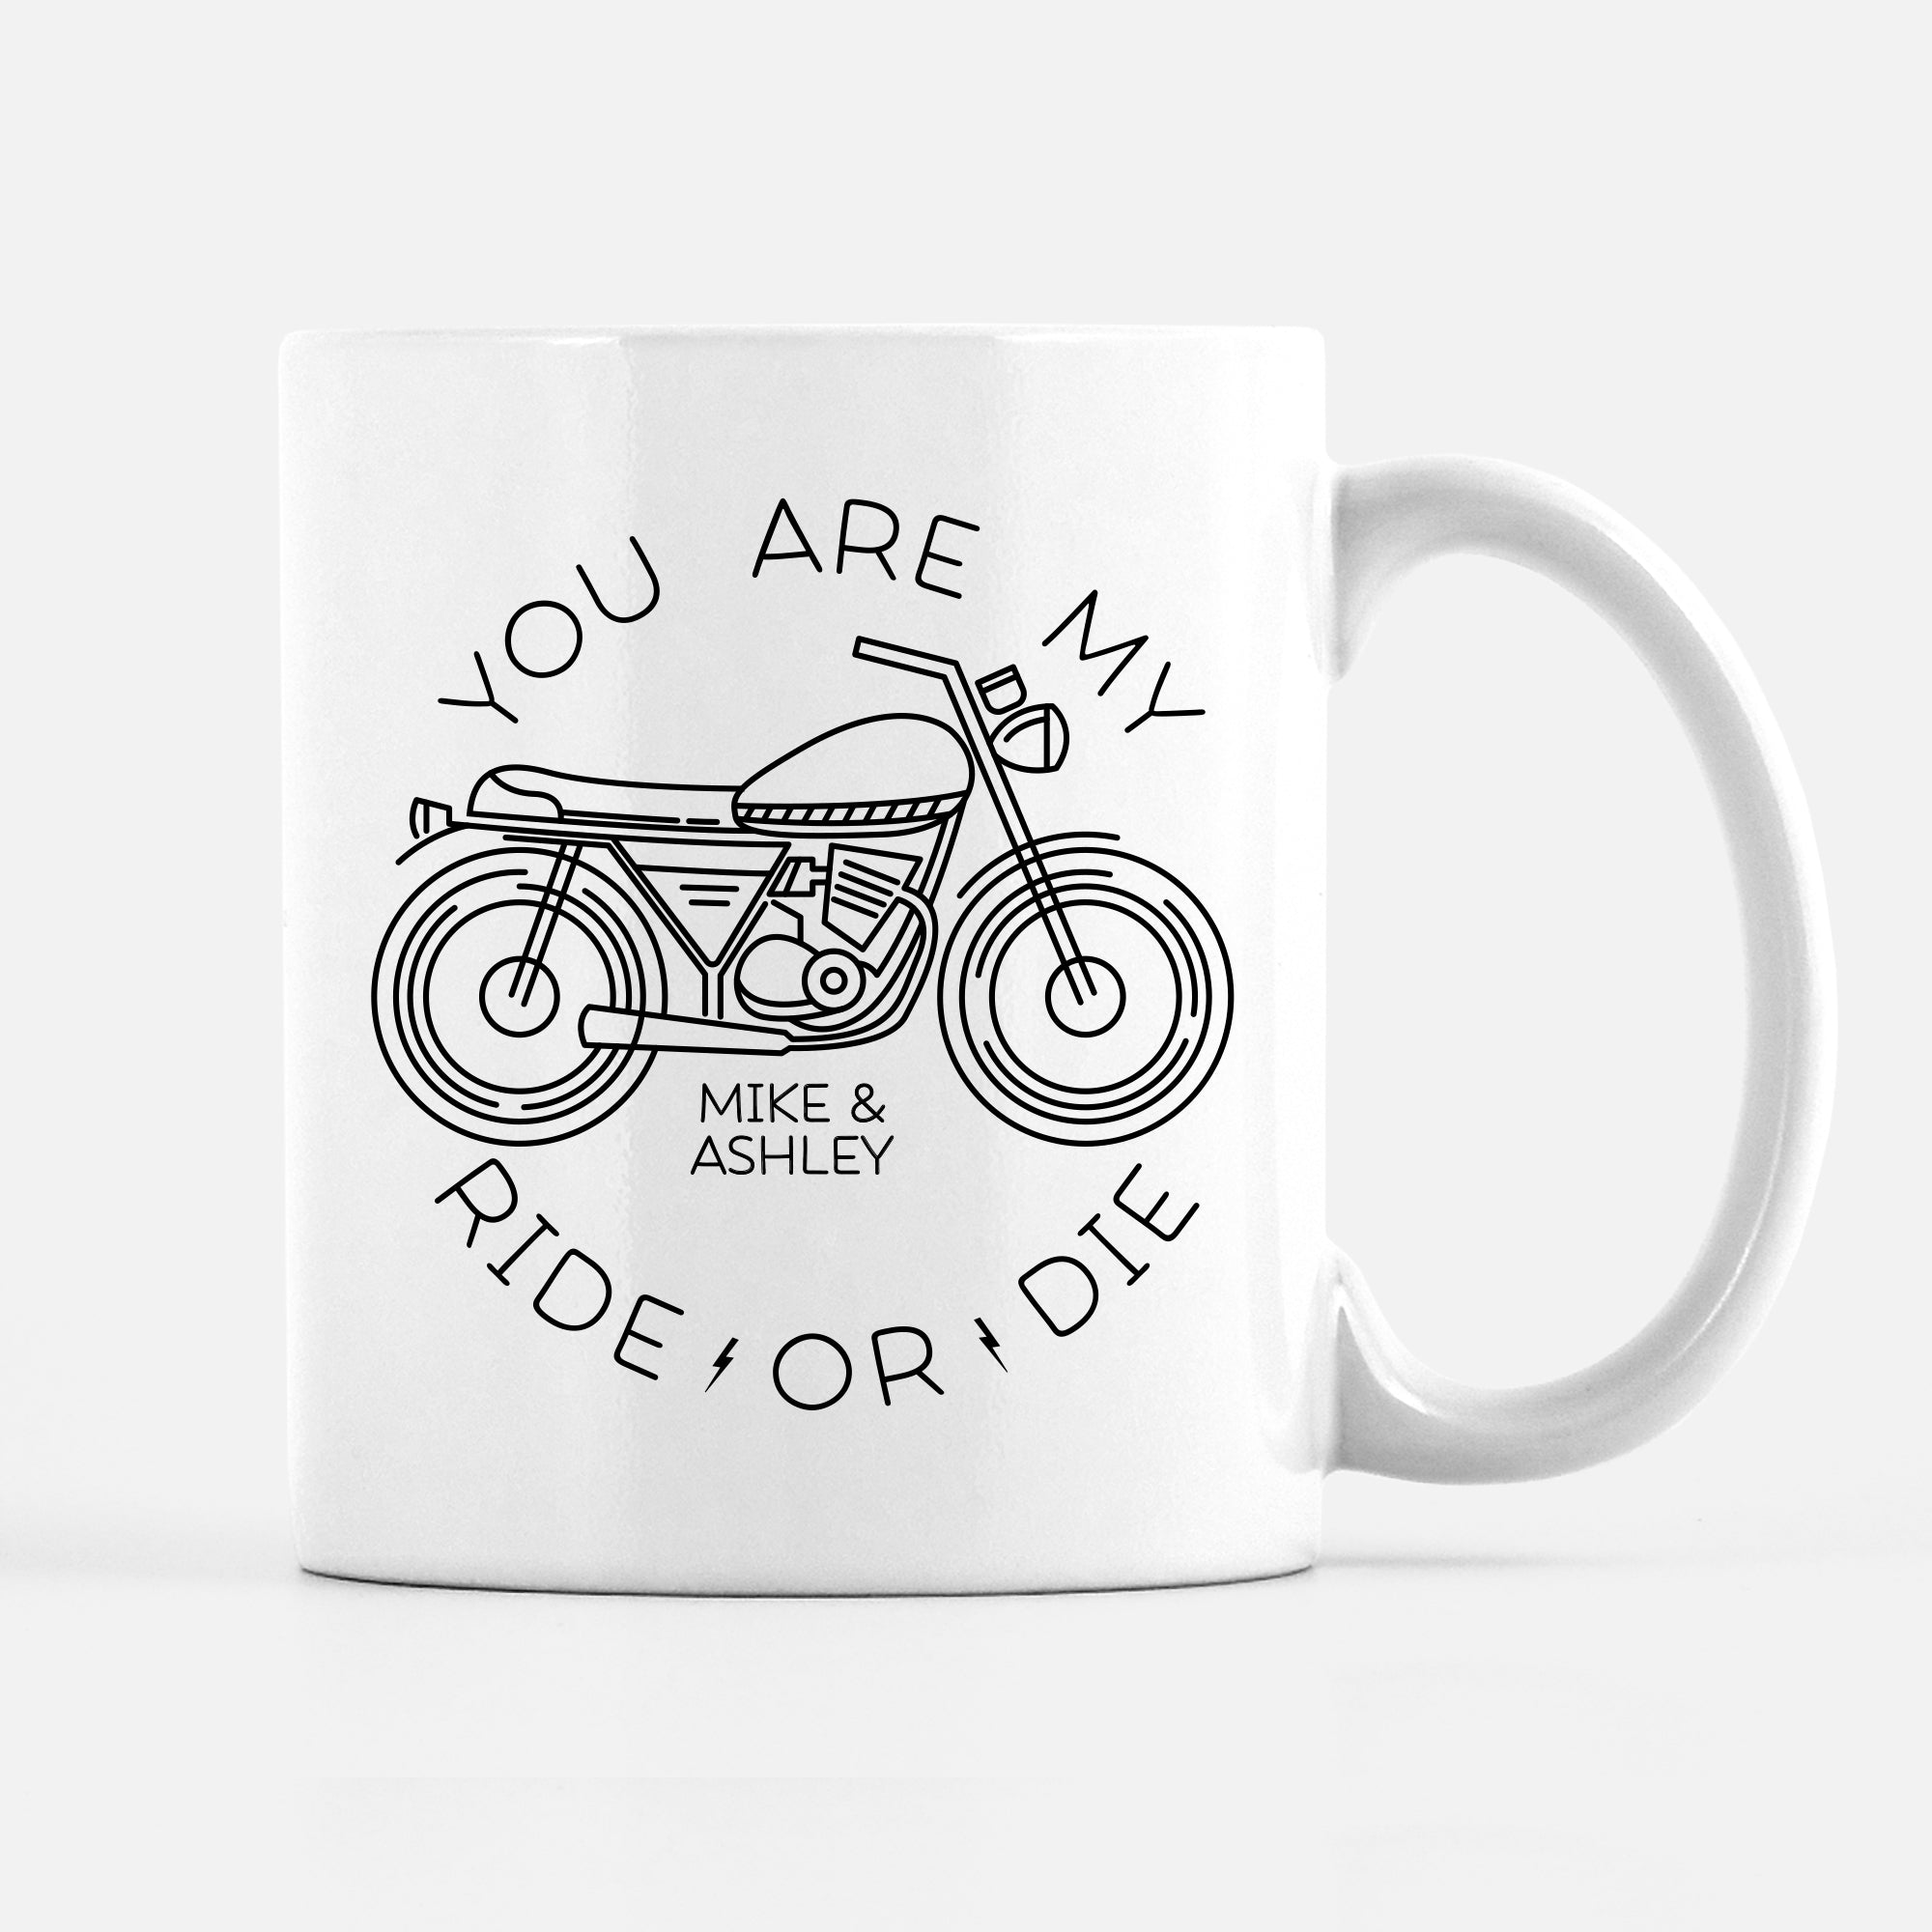 You Are My Ride or Die Mug